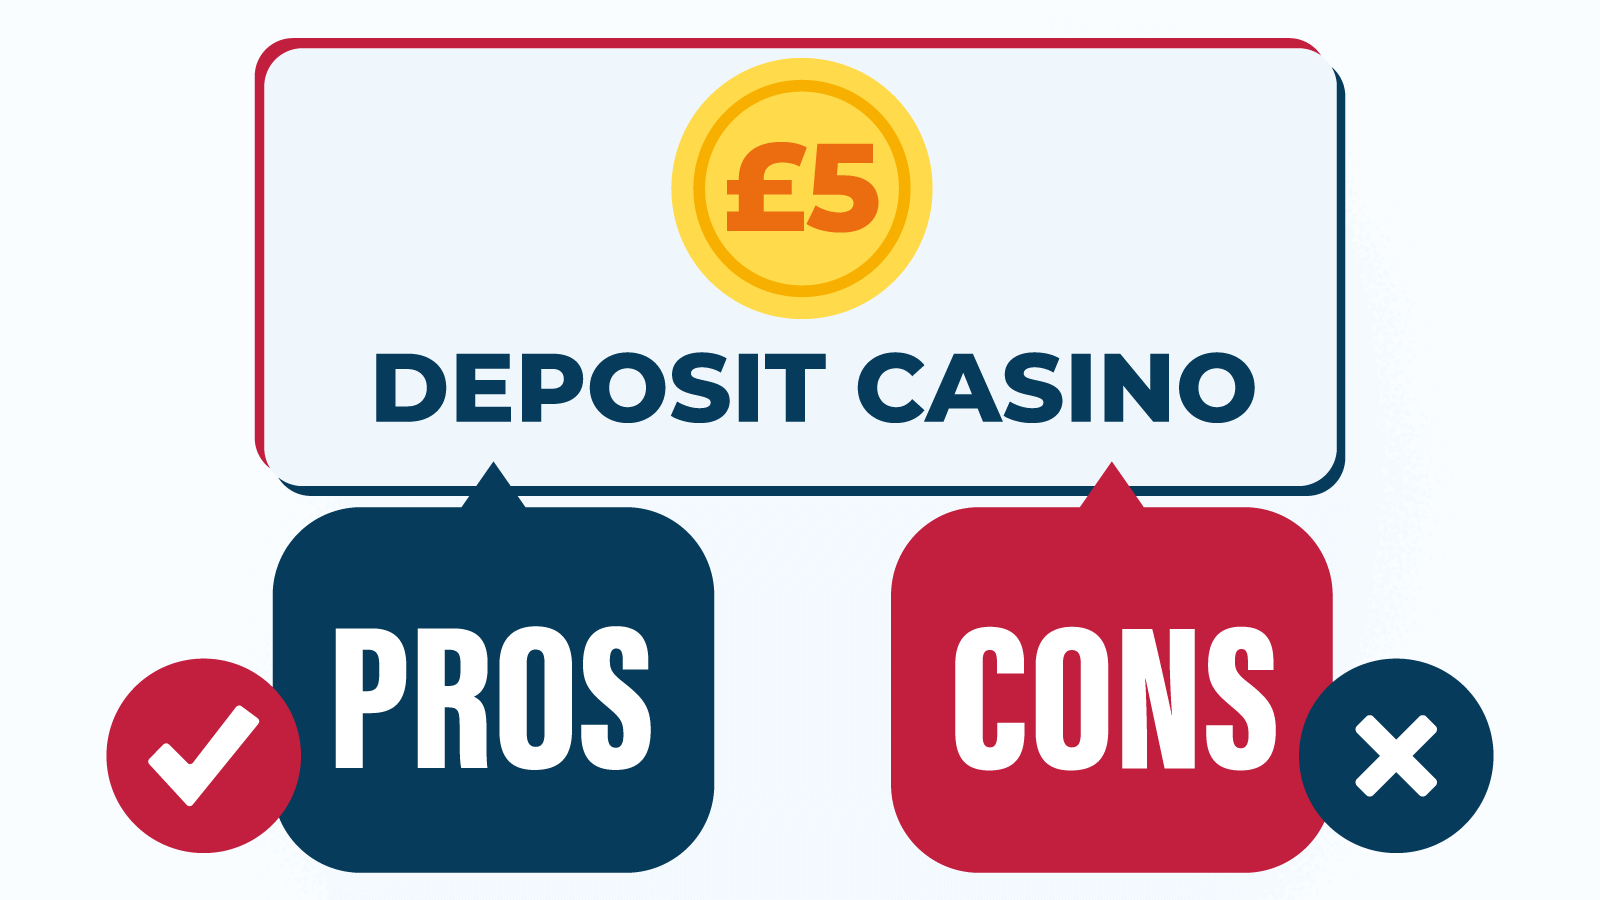 £5 Deposit Casino Pros and Cons